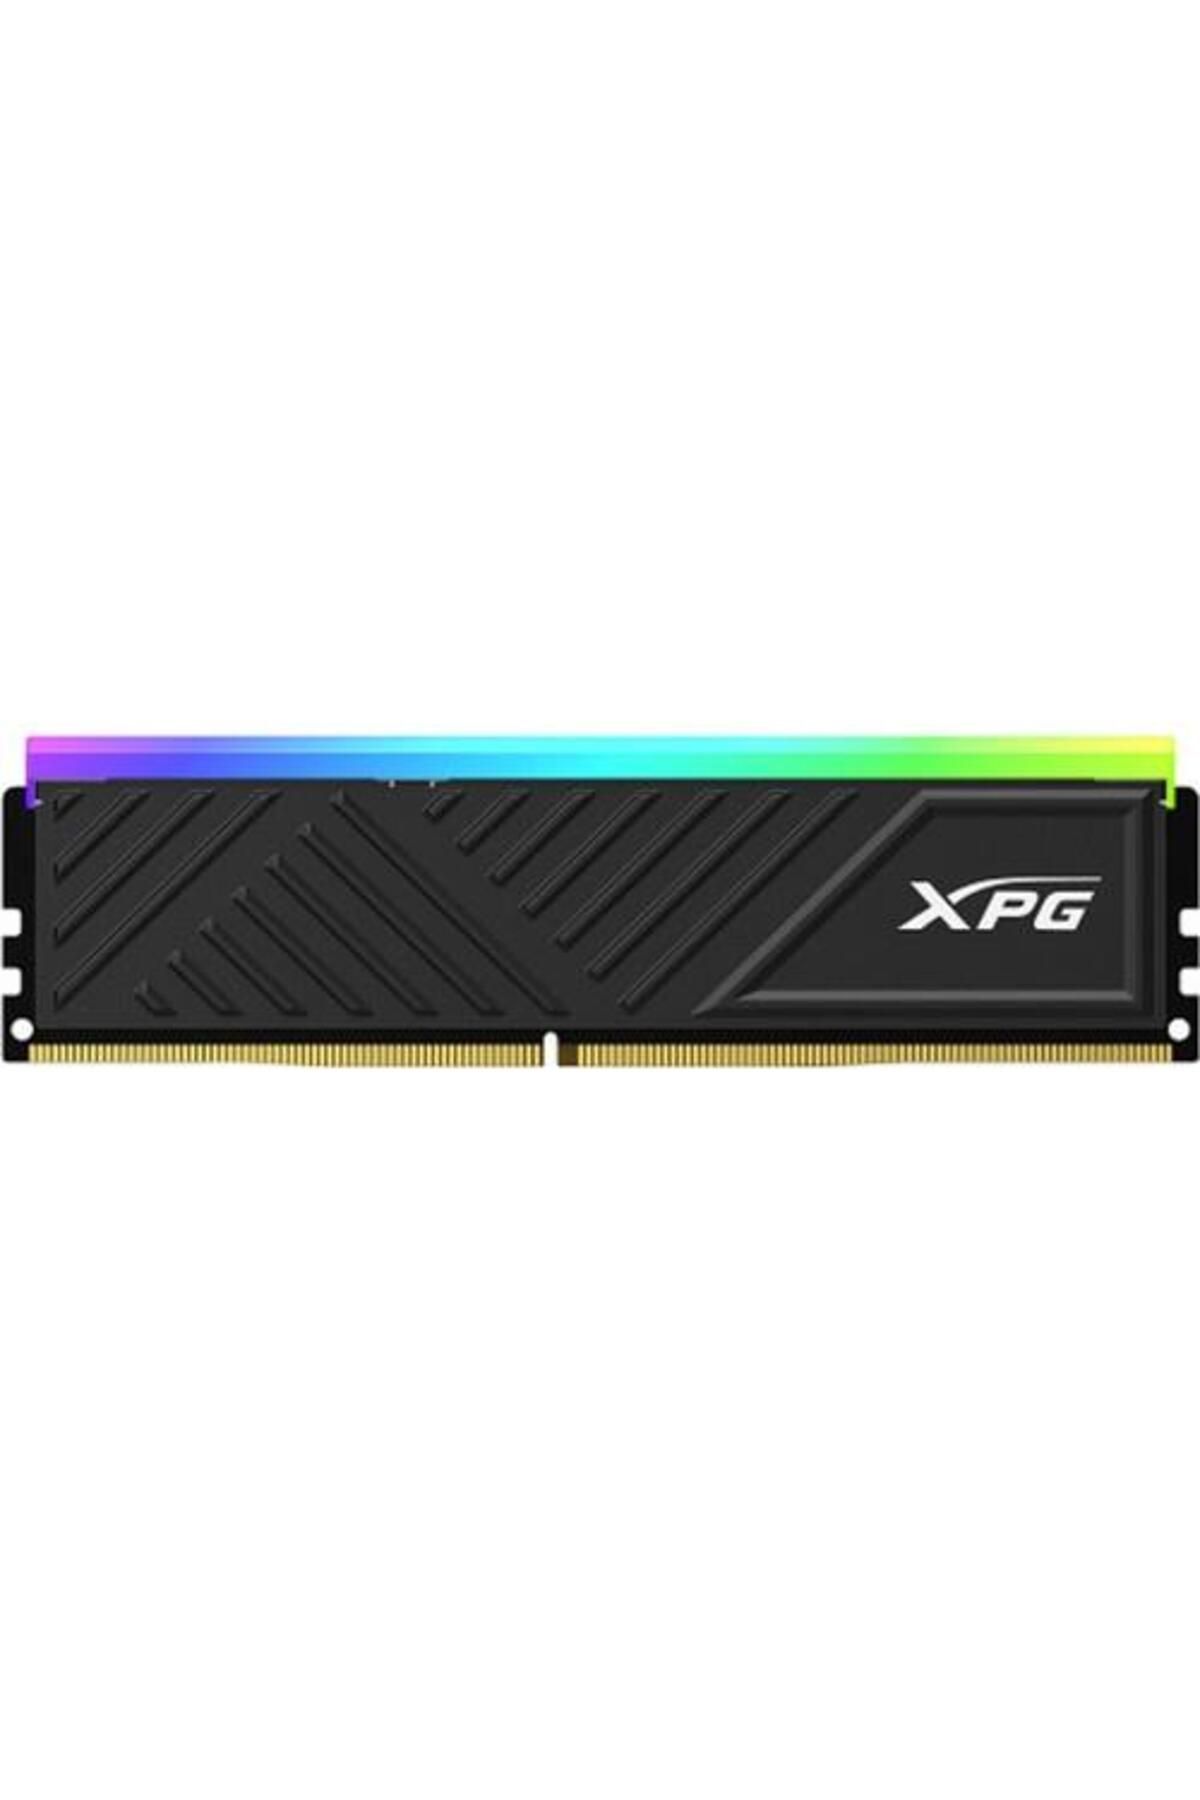 XPG Spectrix D35g Rgb Ddr4-3200mhz Cl16 8gb (1X8GB) Single (16-20-20) 1.35v